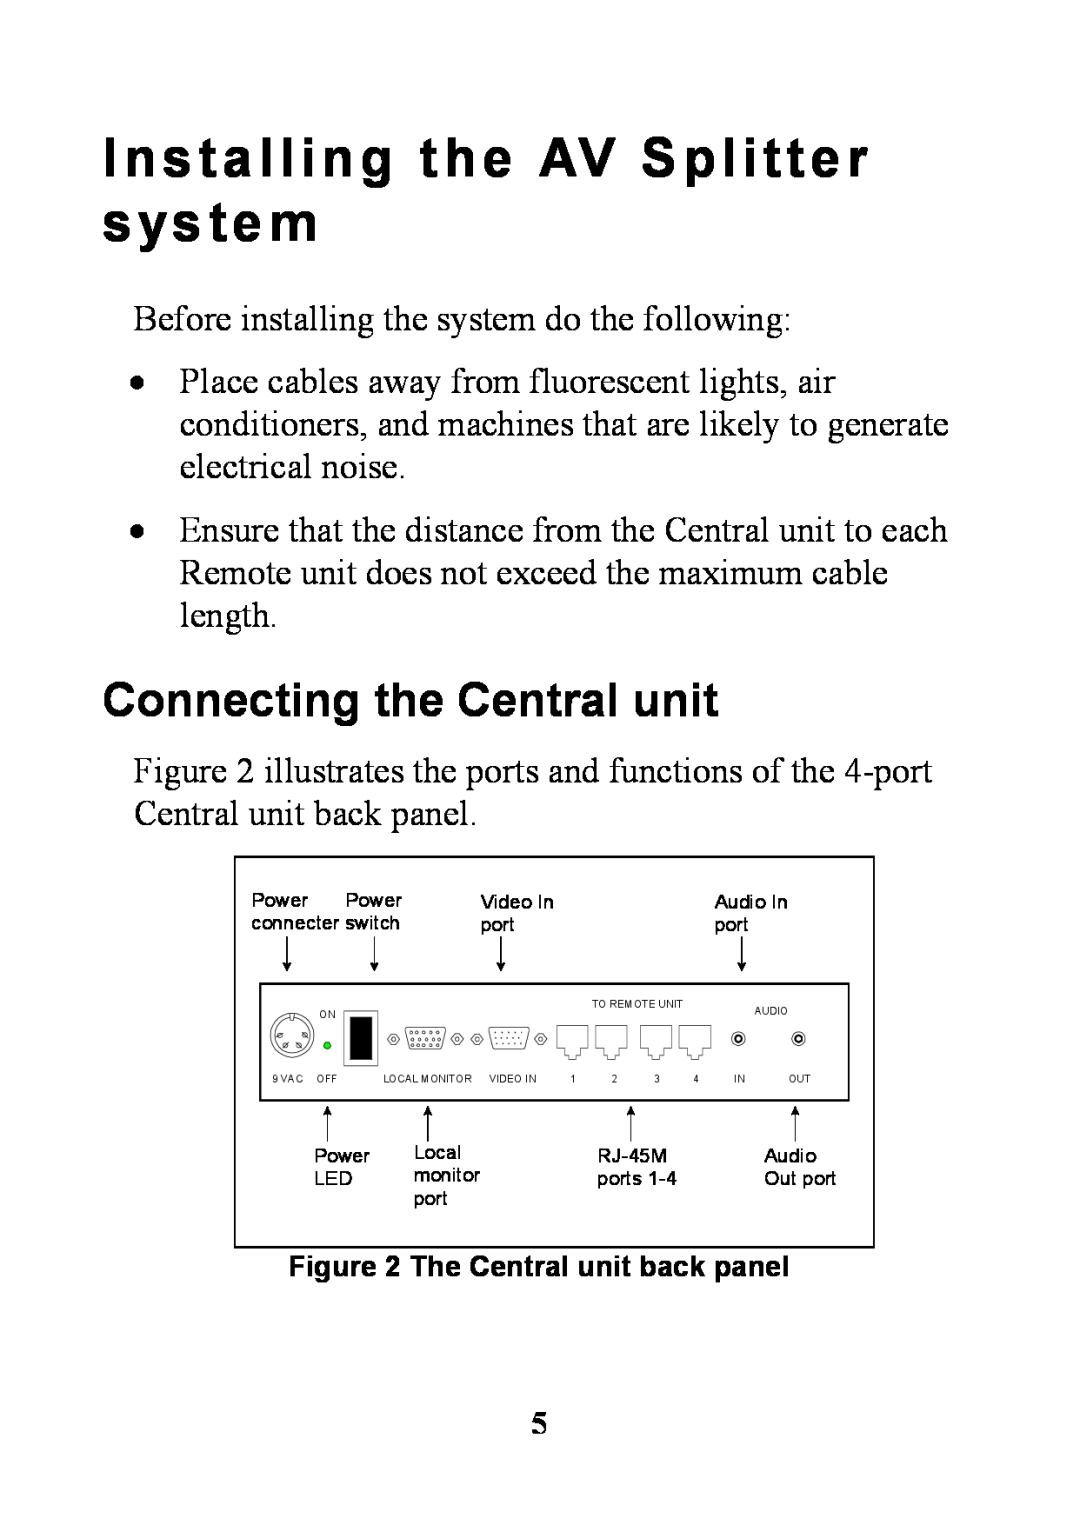 Minicom Advanced Systems 5UM40066 - V1 8/01 manual Installing the AV Splitter system, Connecting the Central unit 